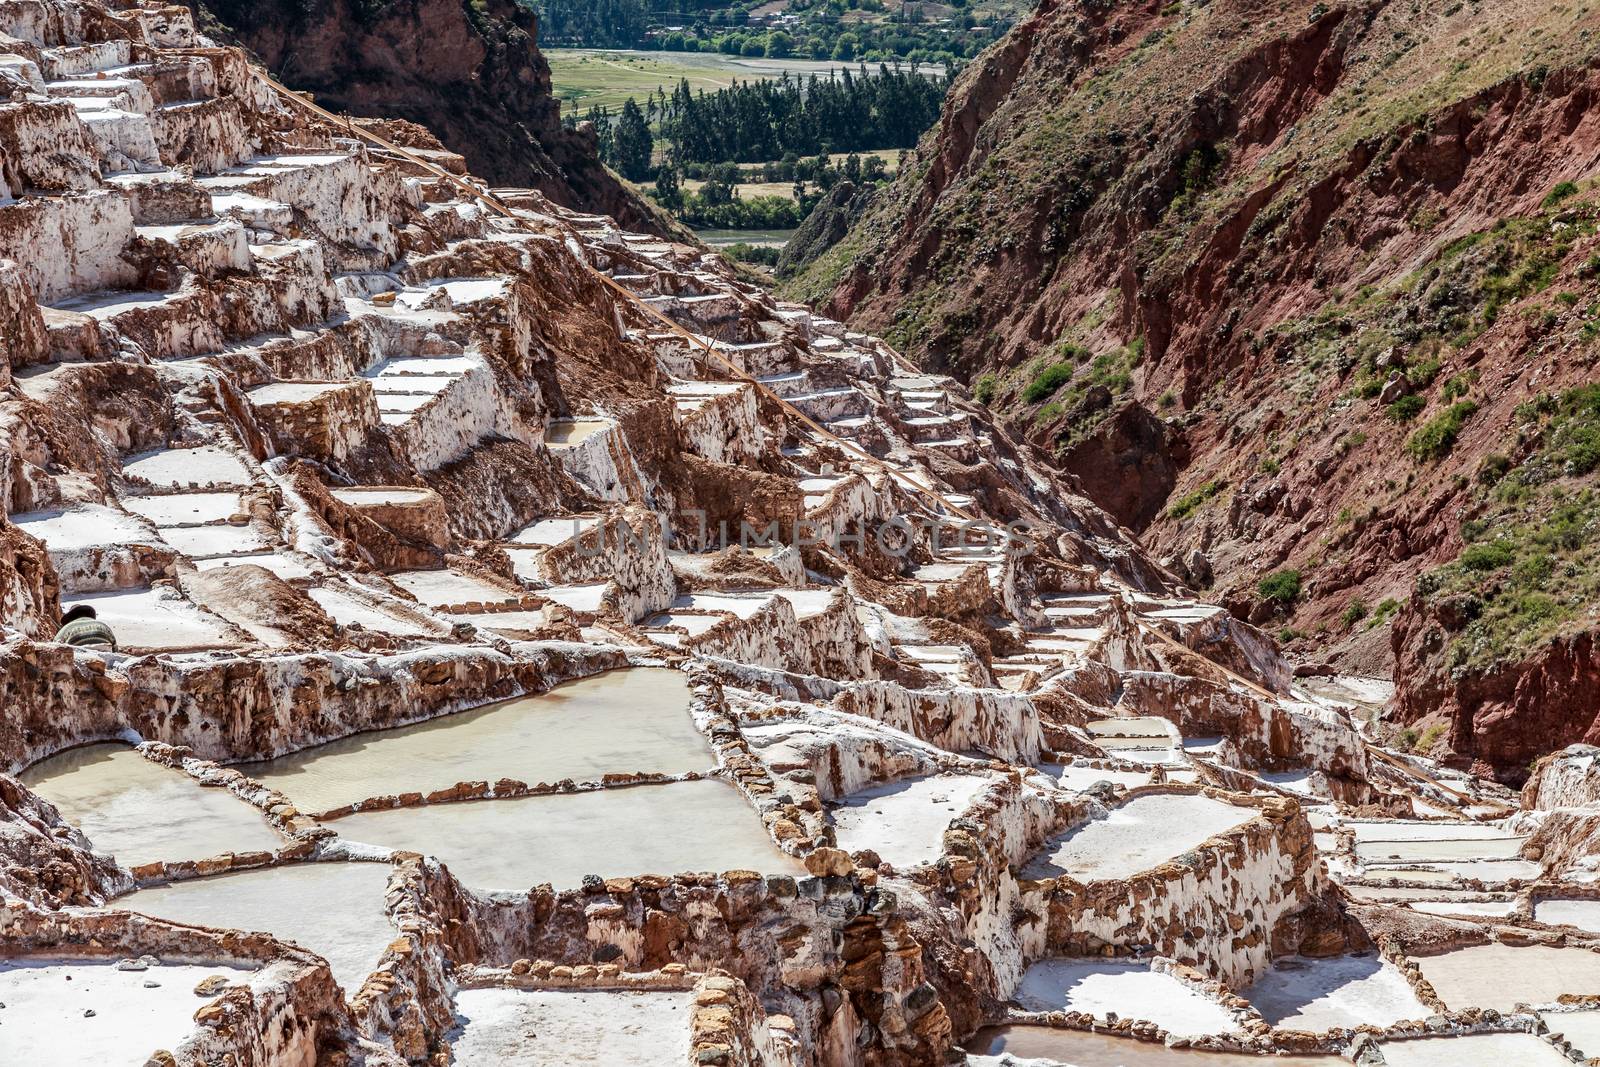 Salt mines terraces and basins, Salineras de Maras. Peru by ambeon